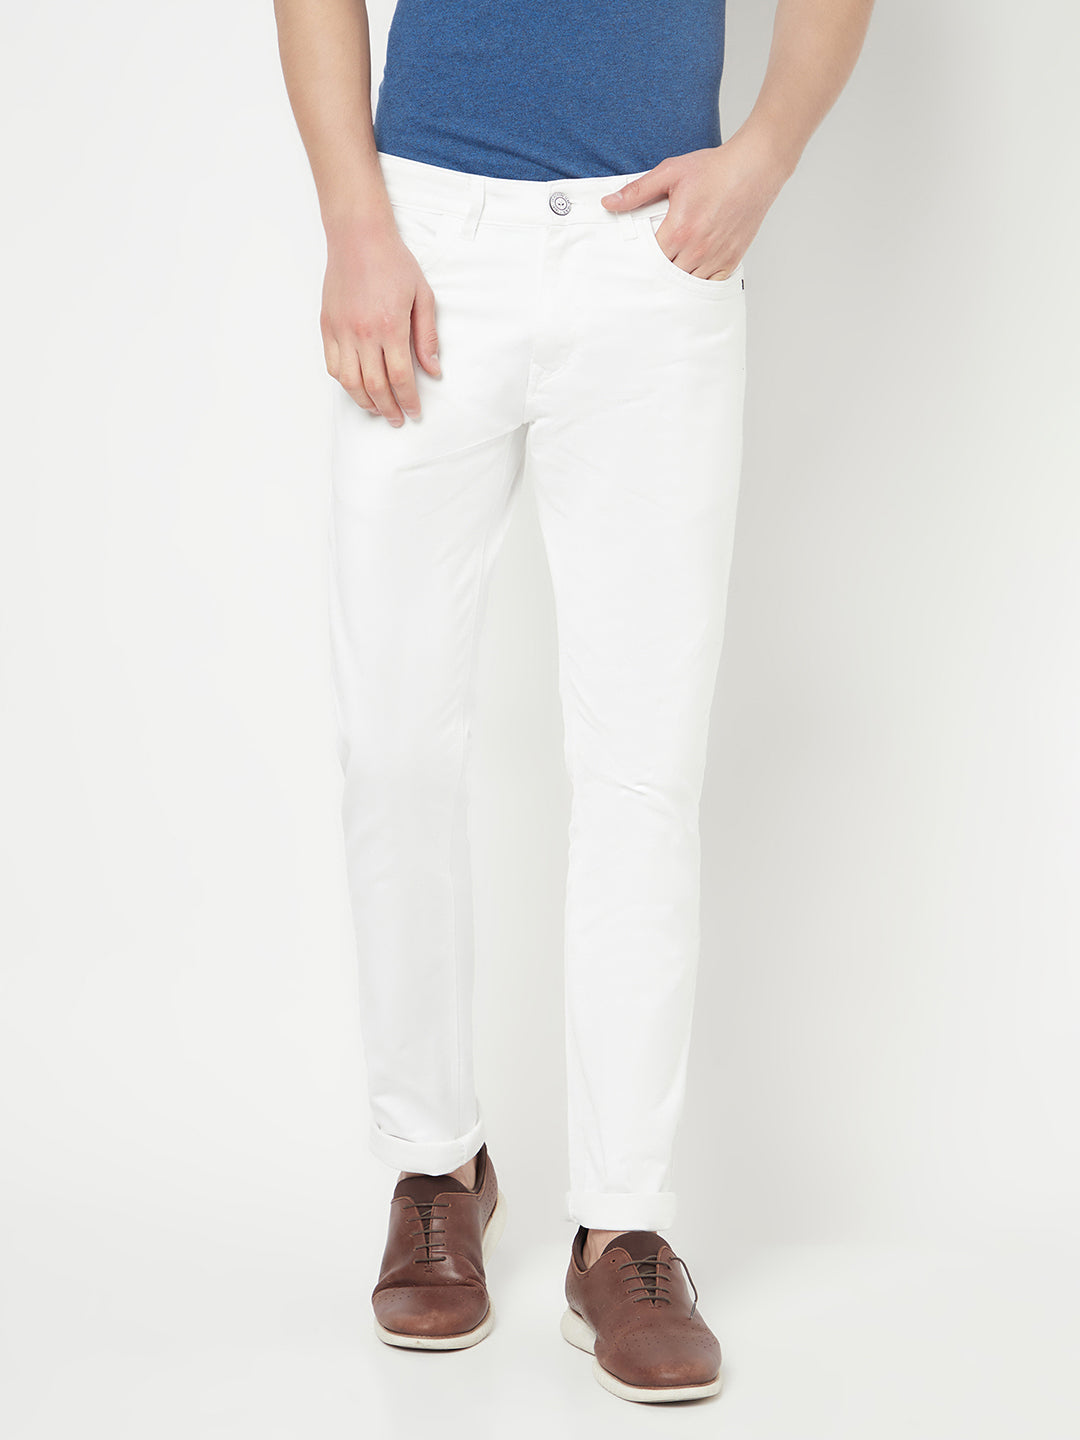 White Jeans - Men Jeans